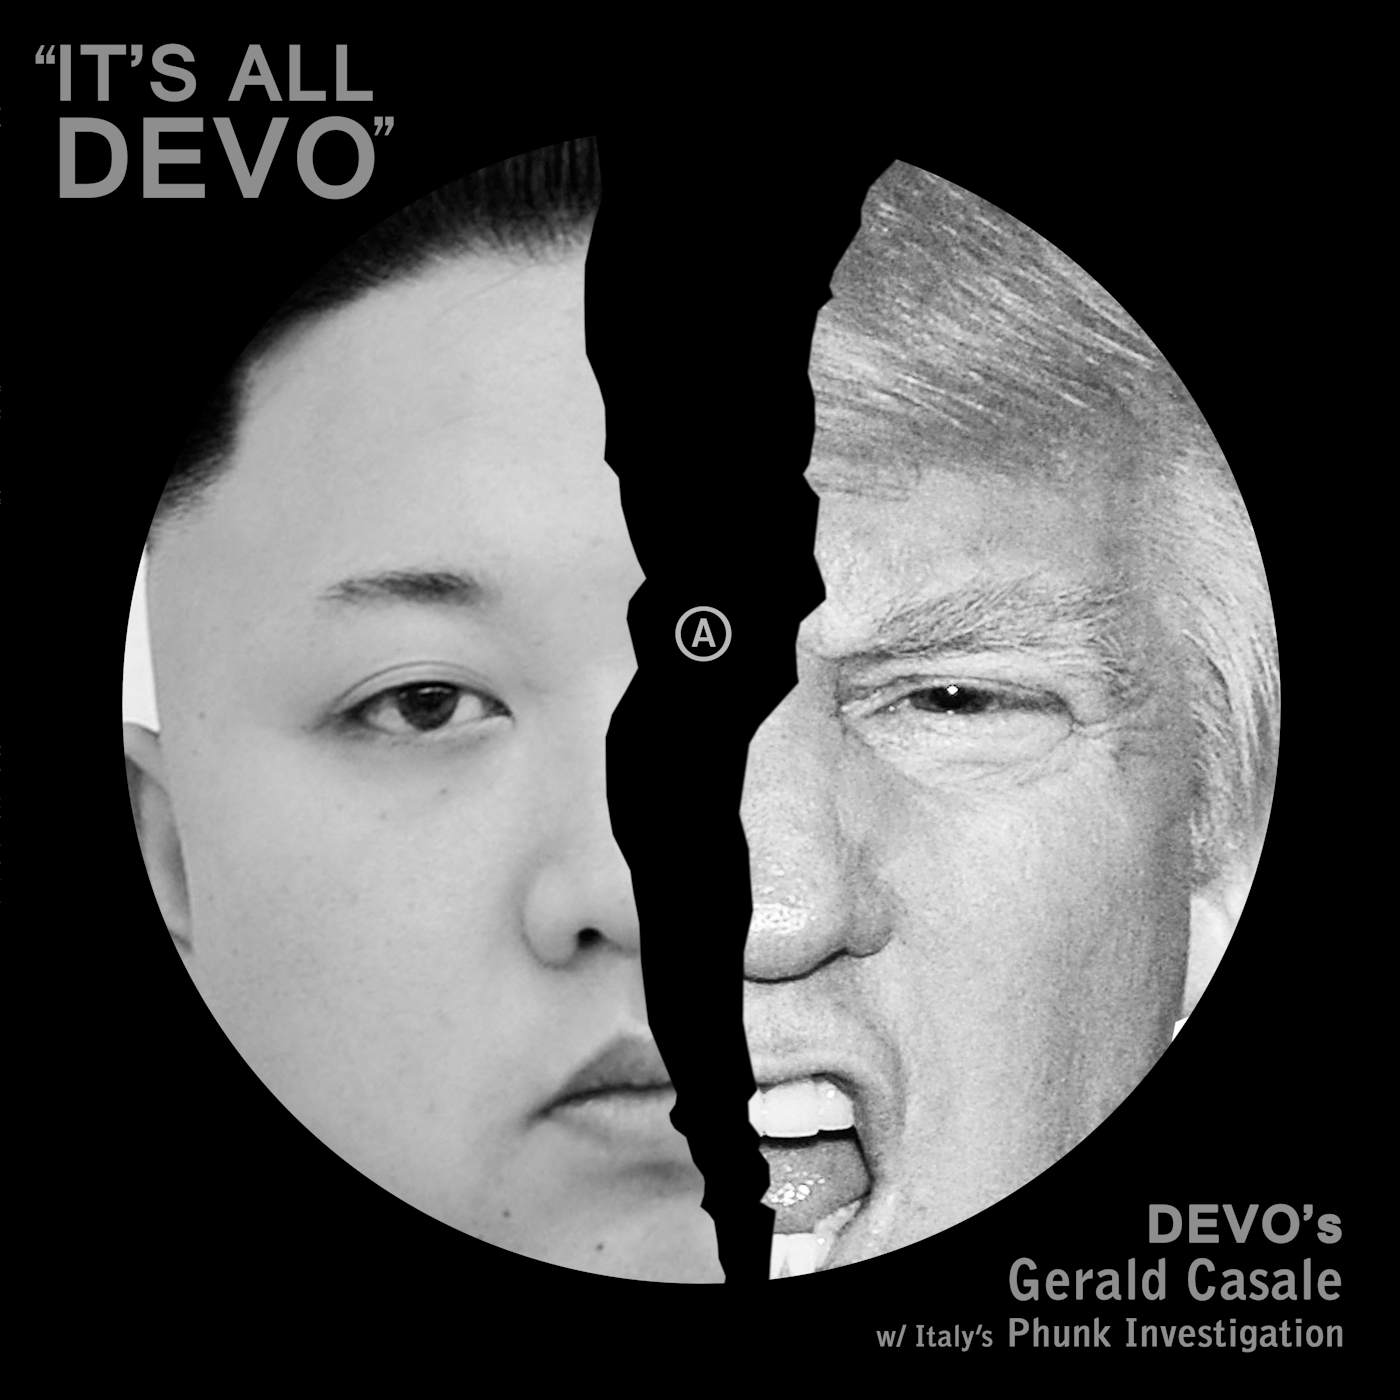 DEVO's Gerald V. Casale IT'S ALL DEVO Vinyl Record